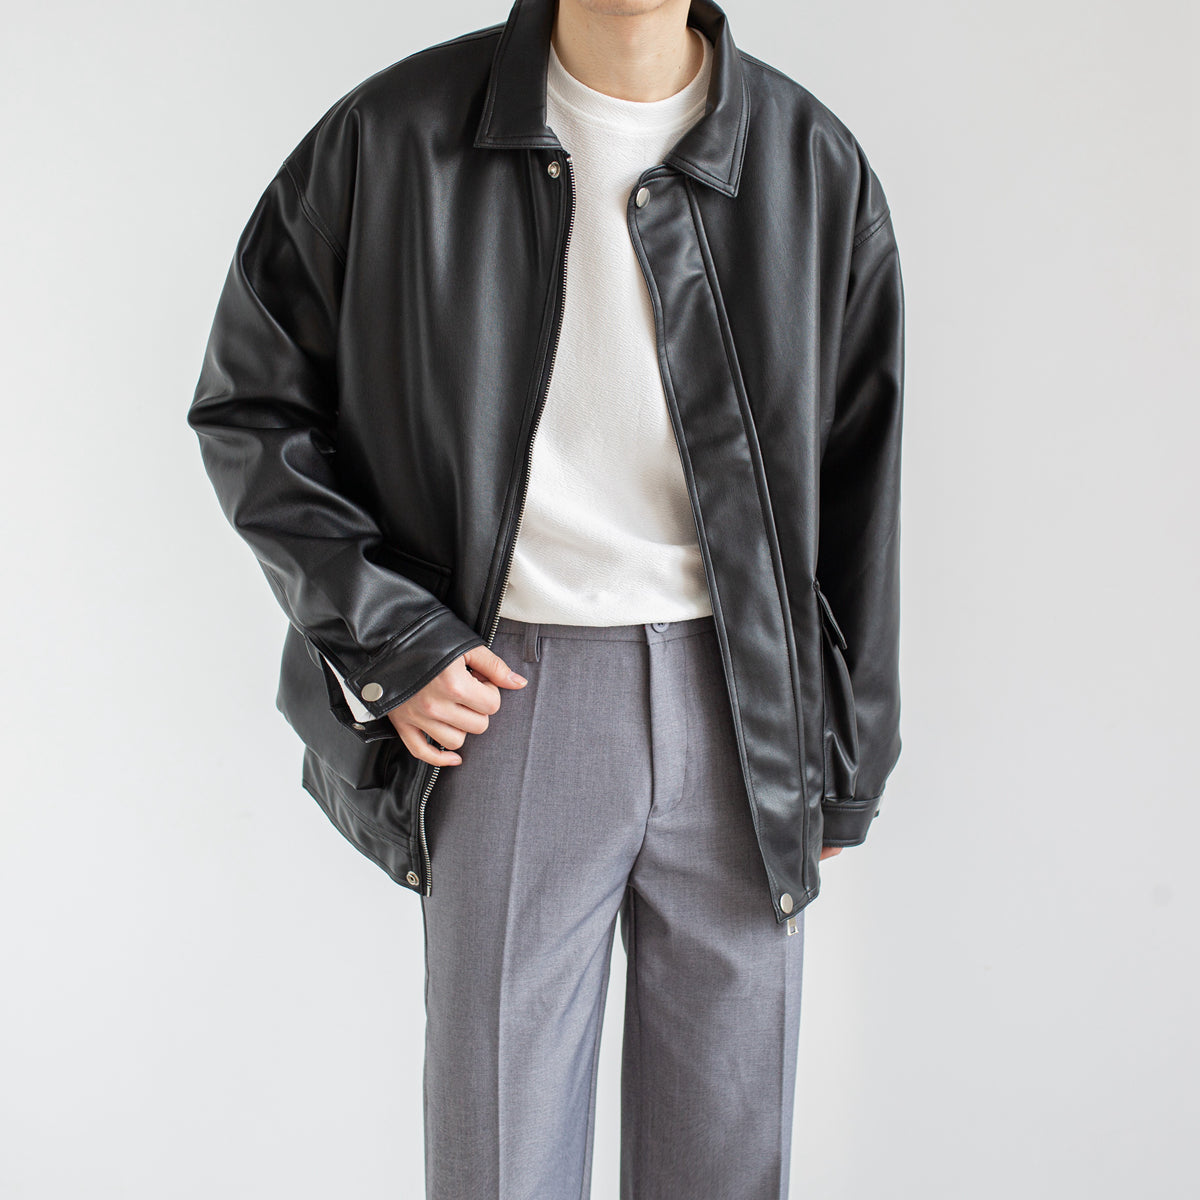 Men's Chic Leather Trendy Jacket frontside